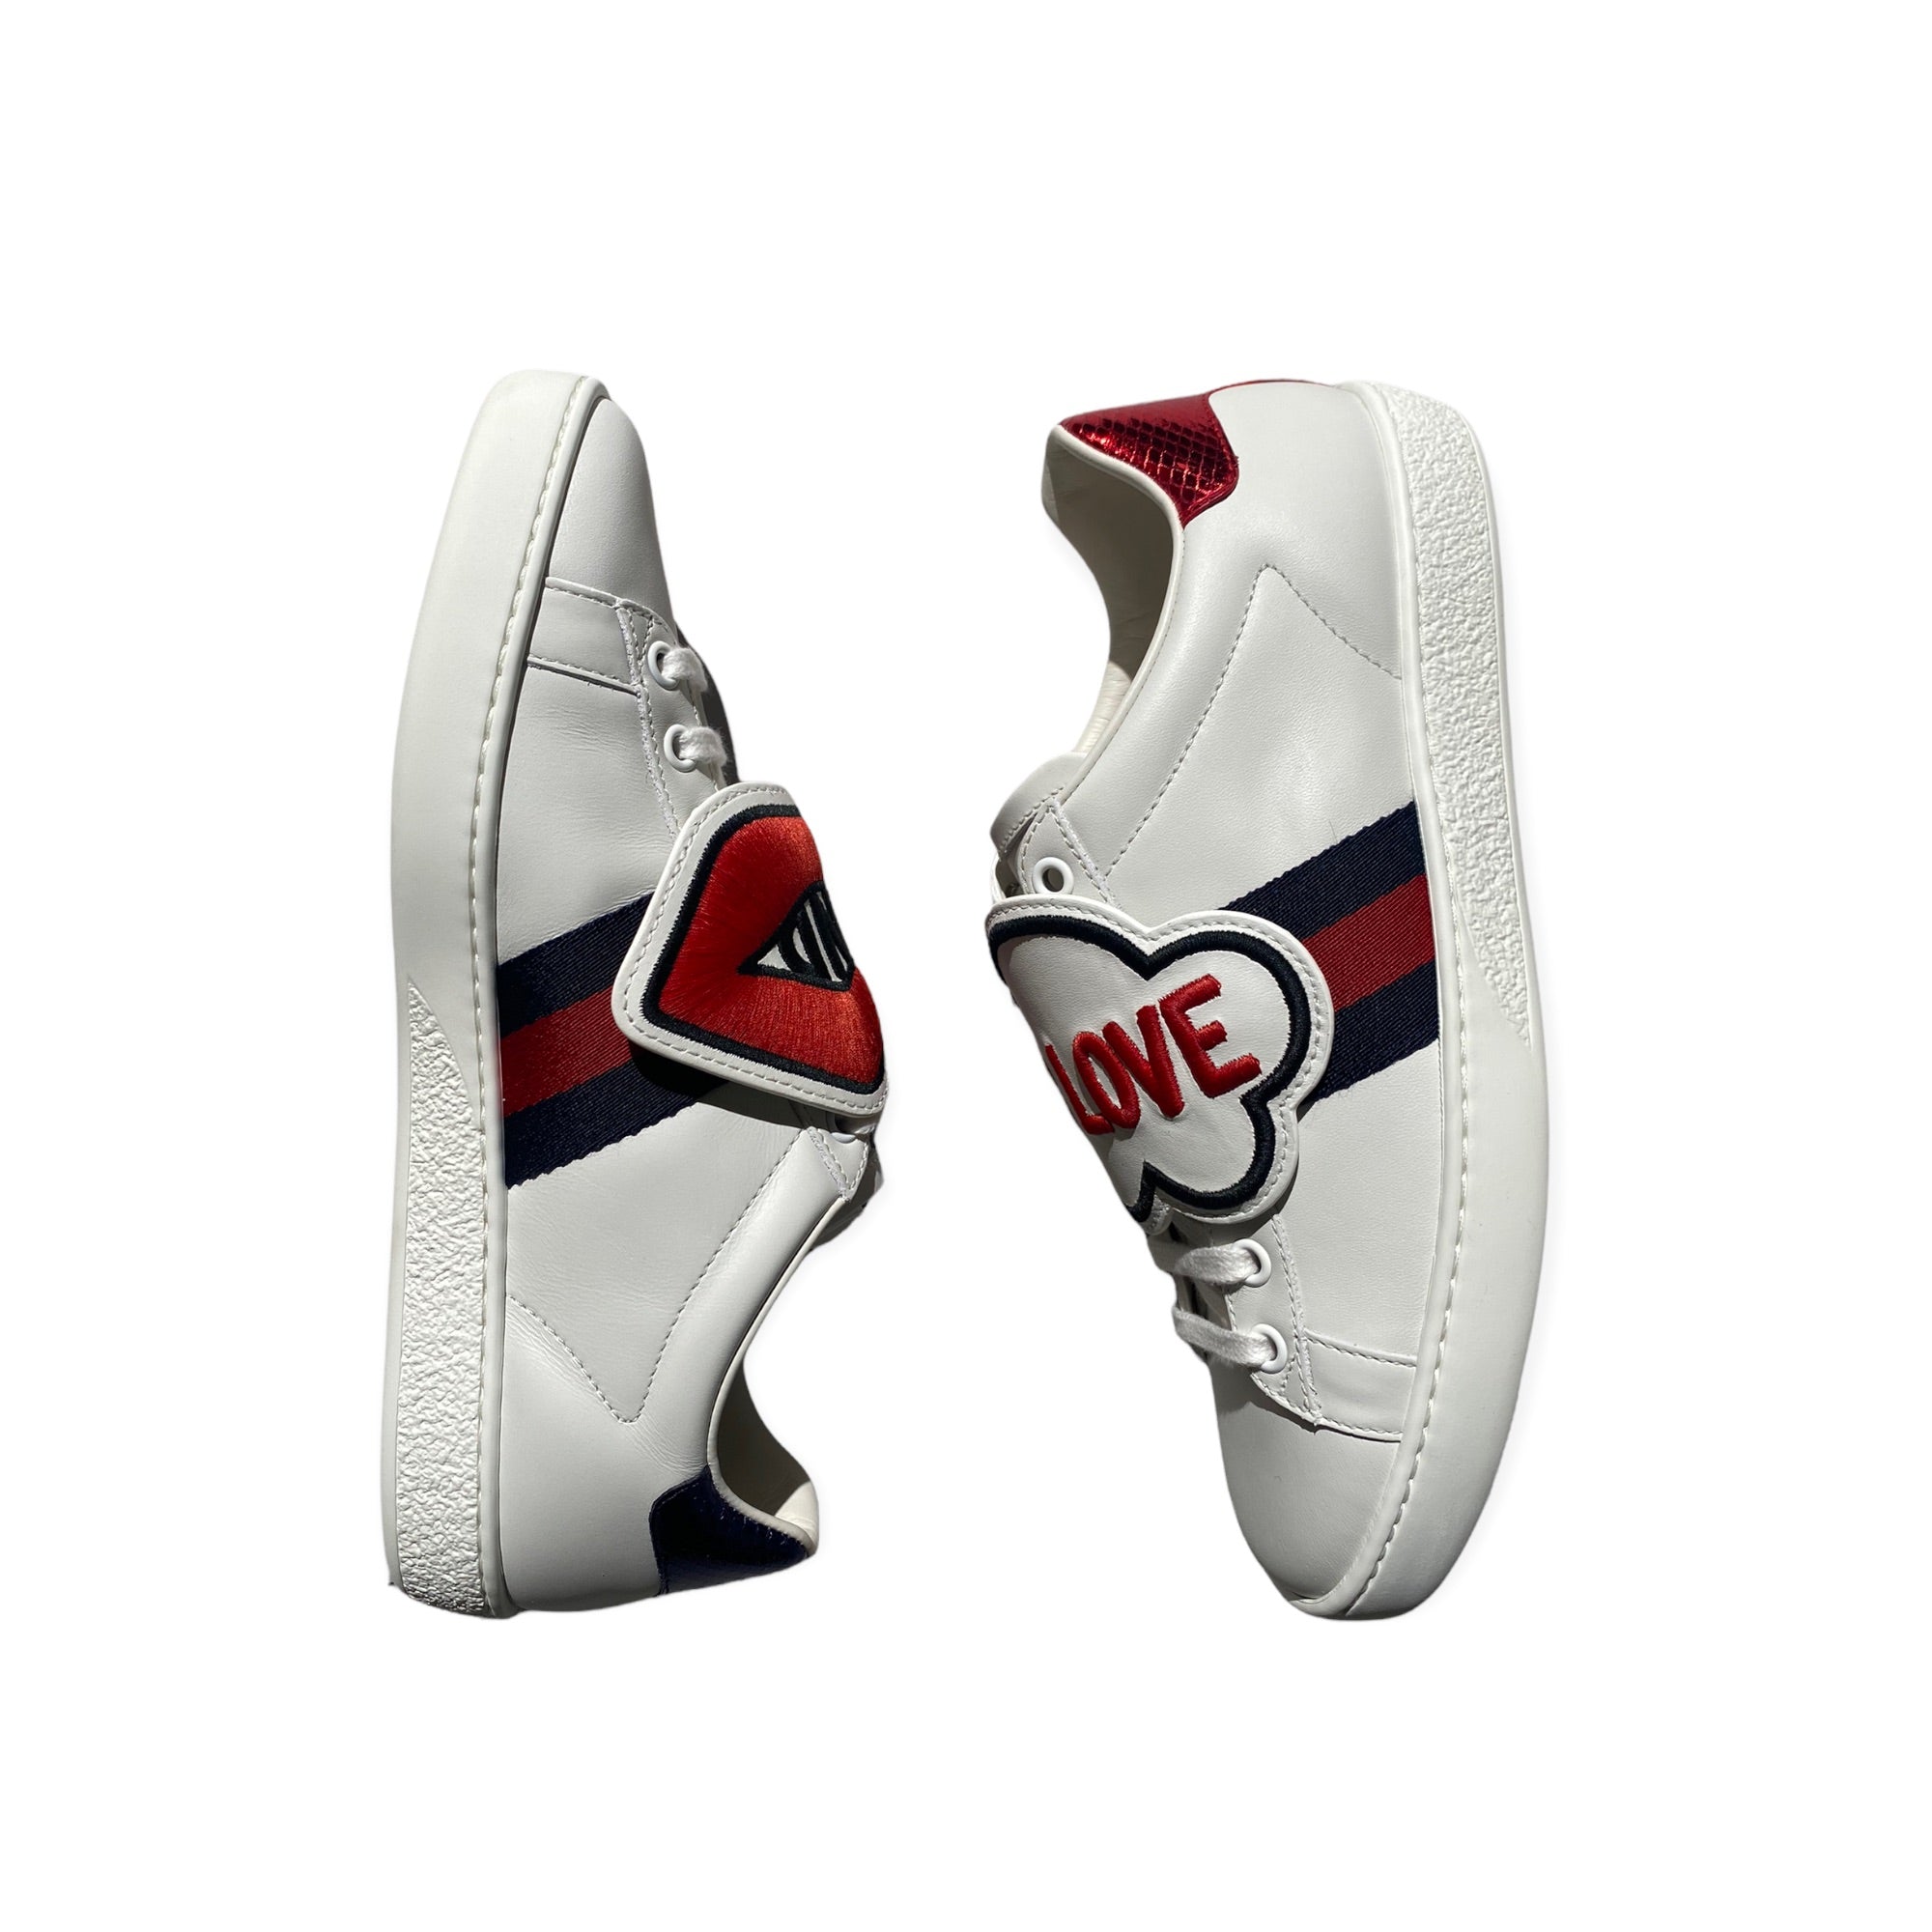 “For Love” ace sneaker